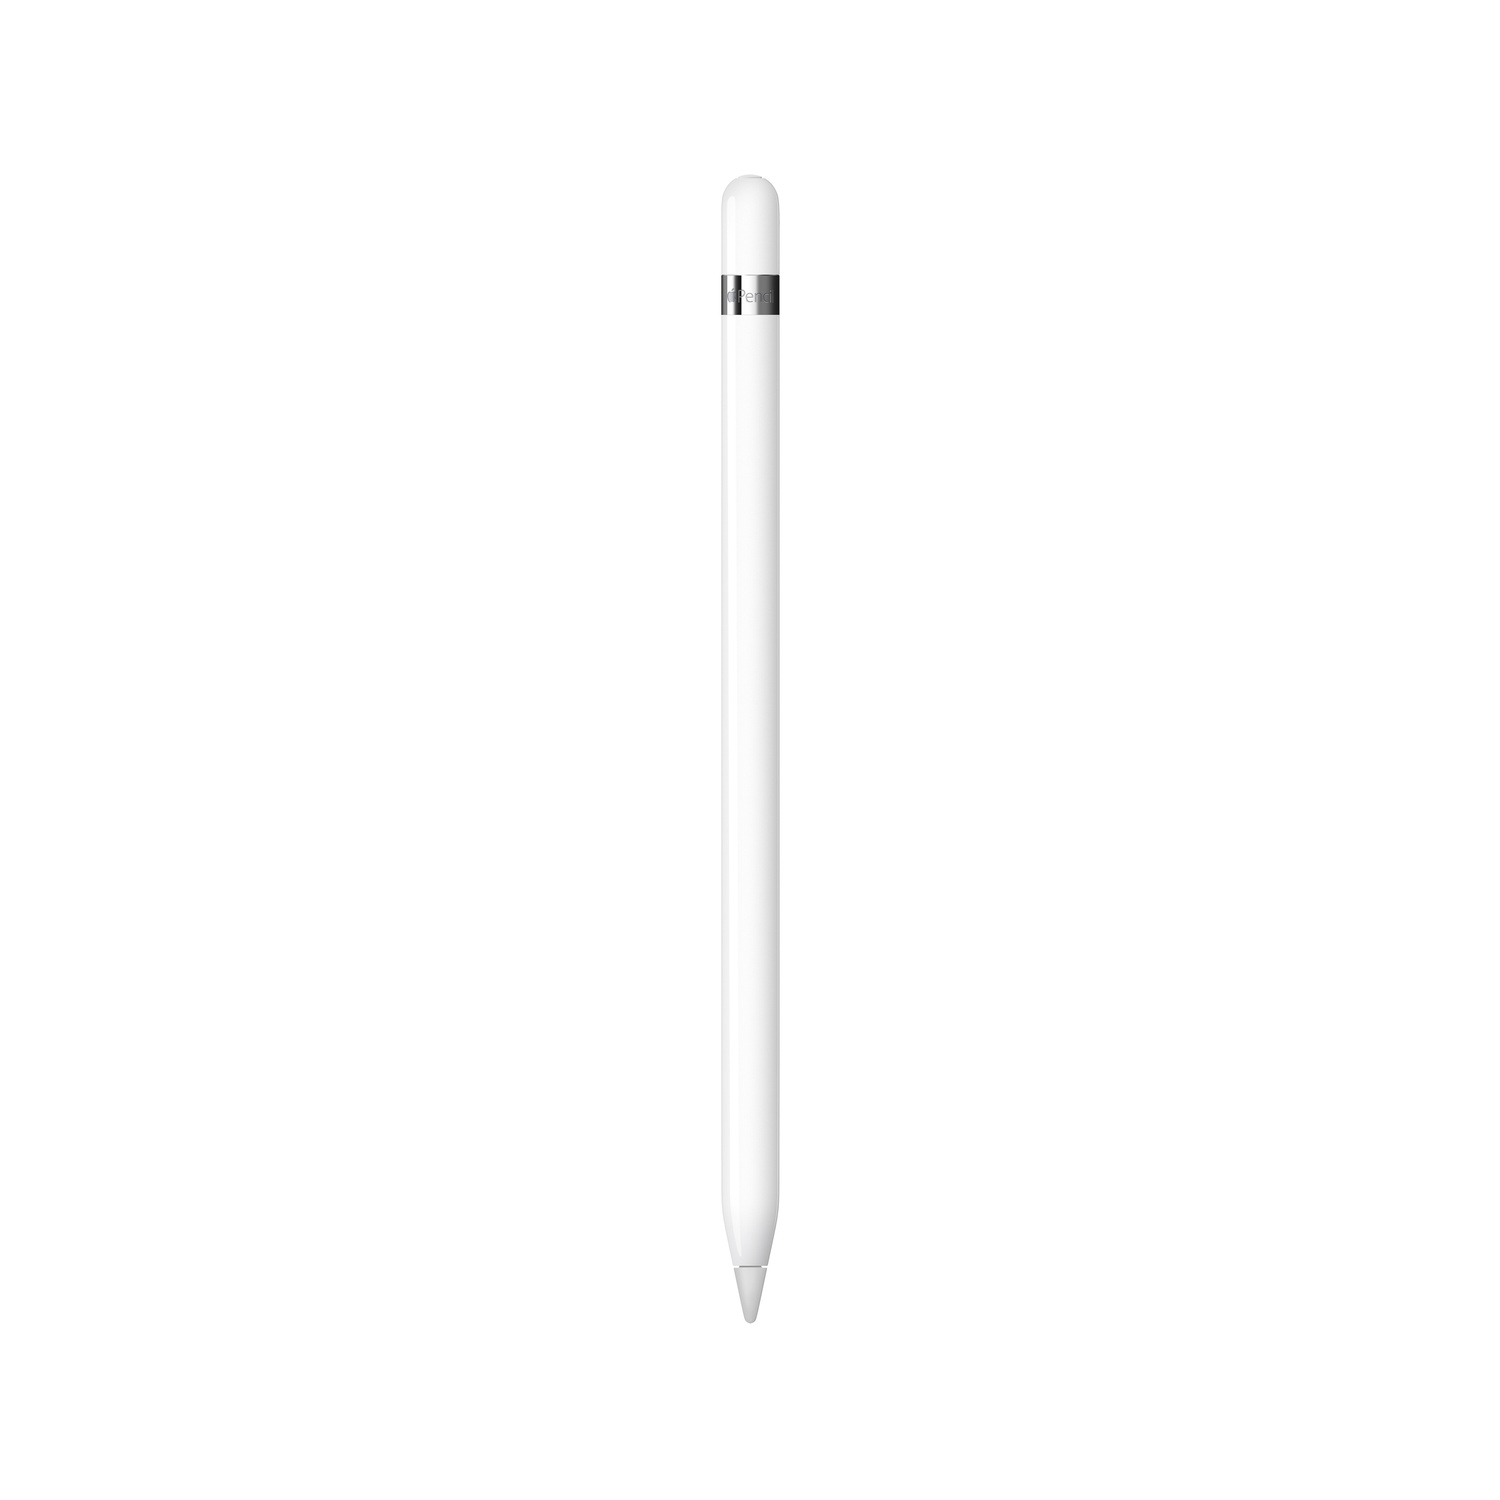 Apple pencil + Apple Magic Keyboard Case for 11-inch iPad Pro (2021)/11-inch iPad Pro (2020) - White.    -  $298.99 + tax at Verizon